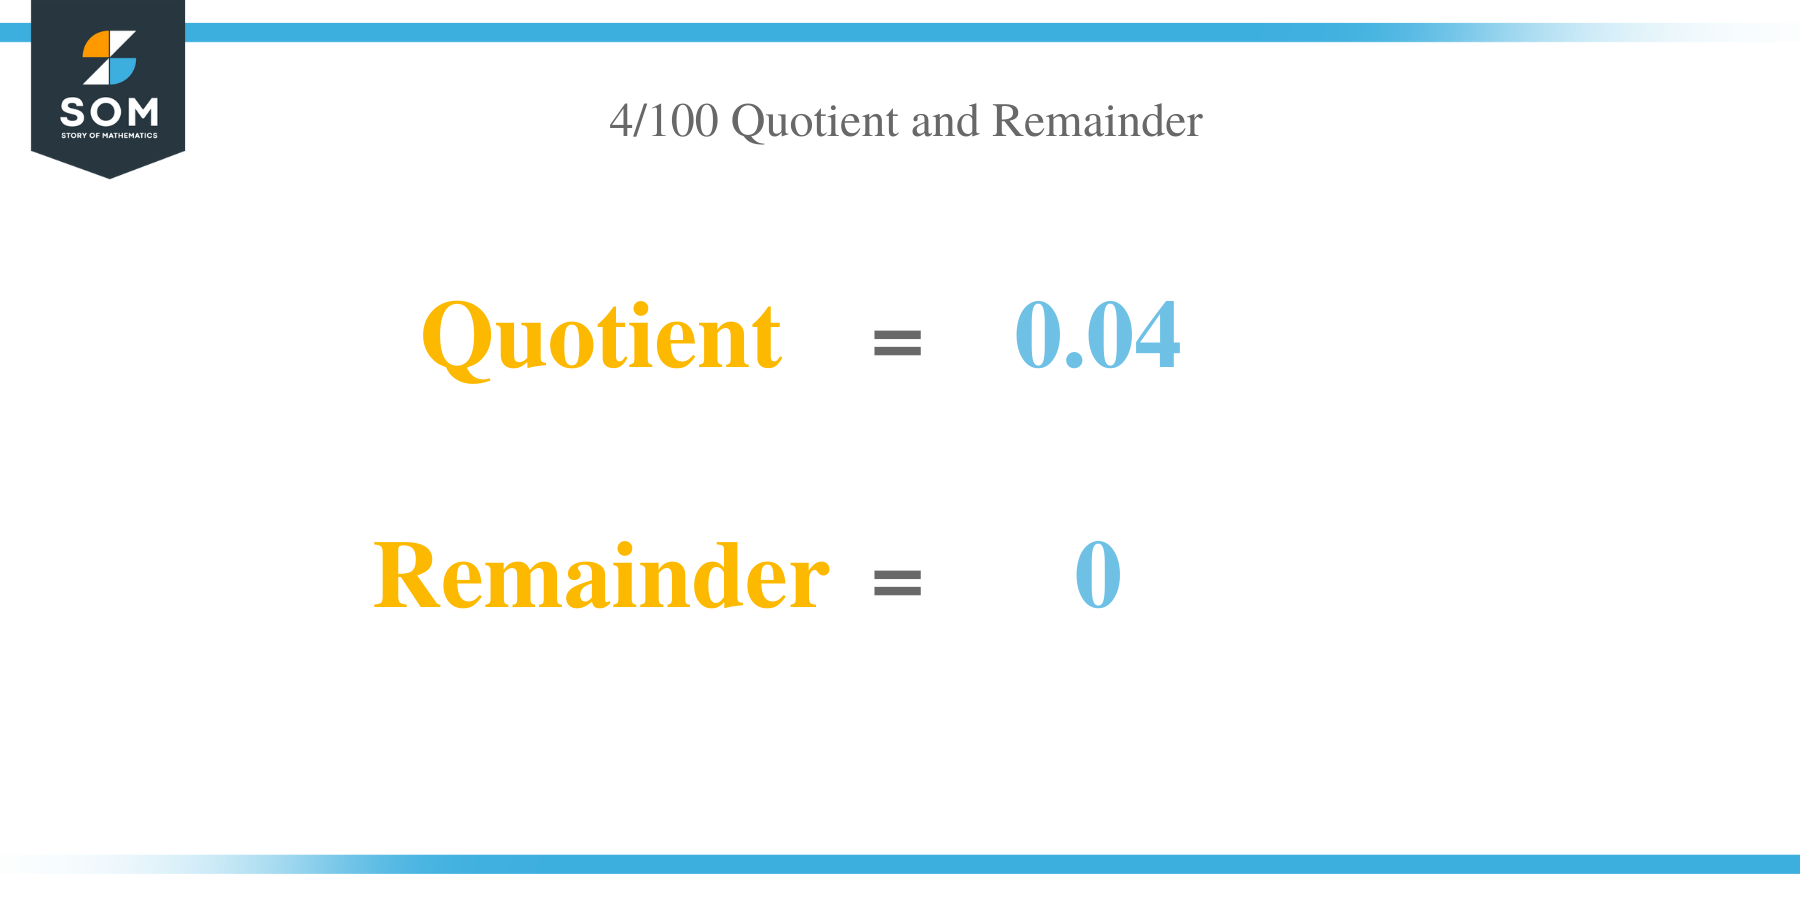 Quotient and Remainder of 4 per 100